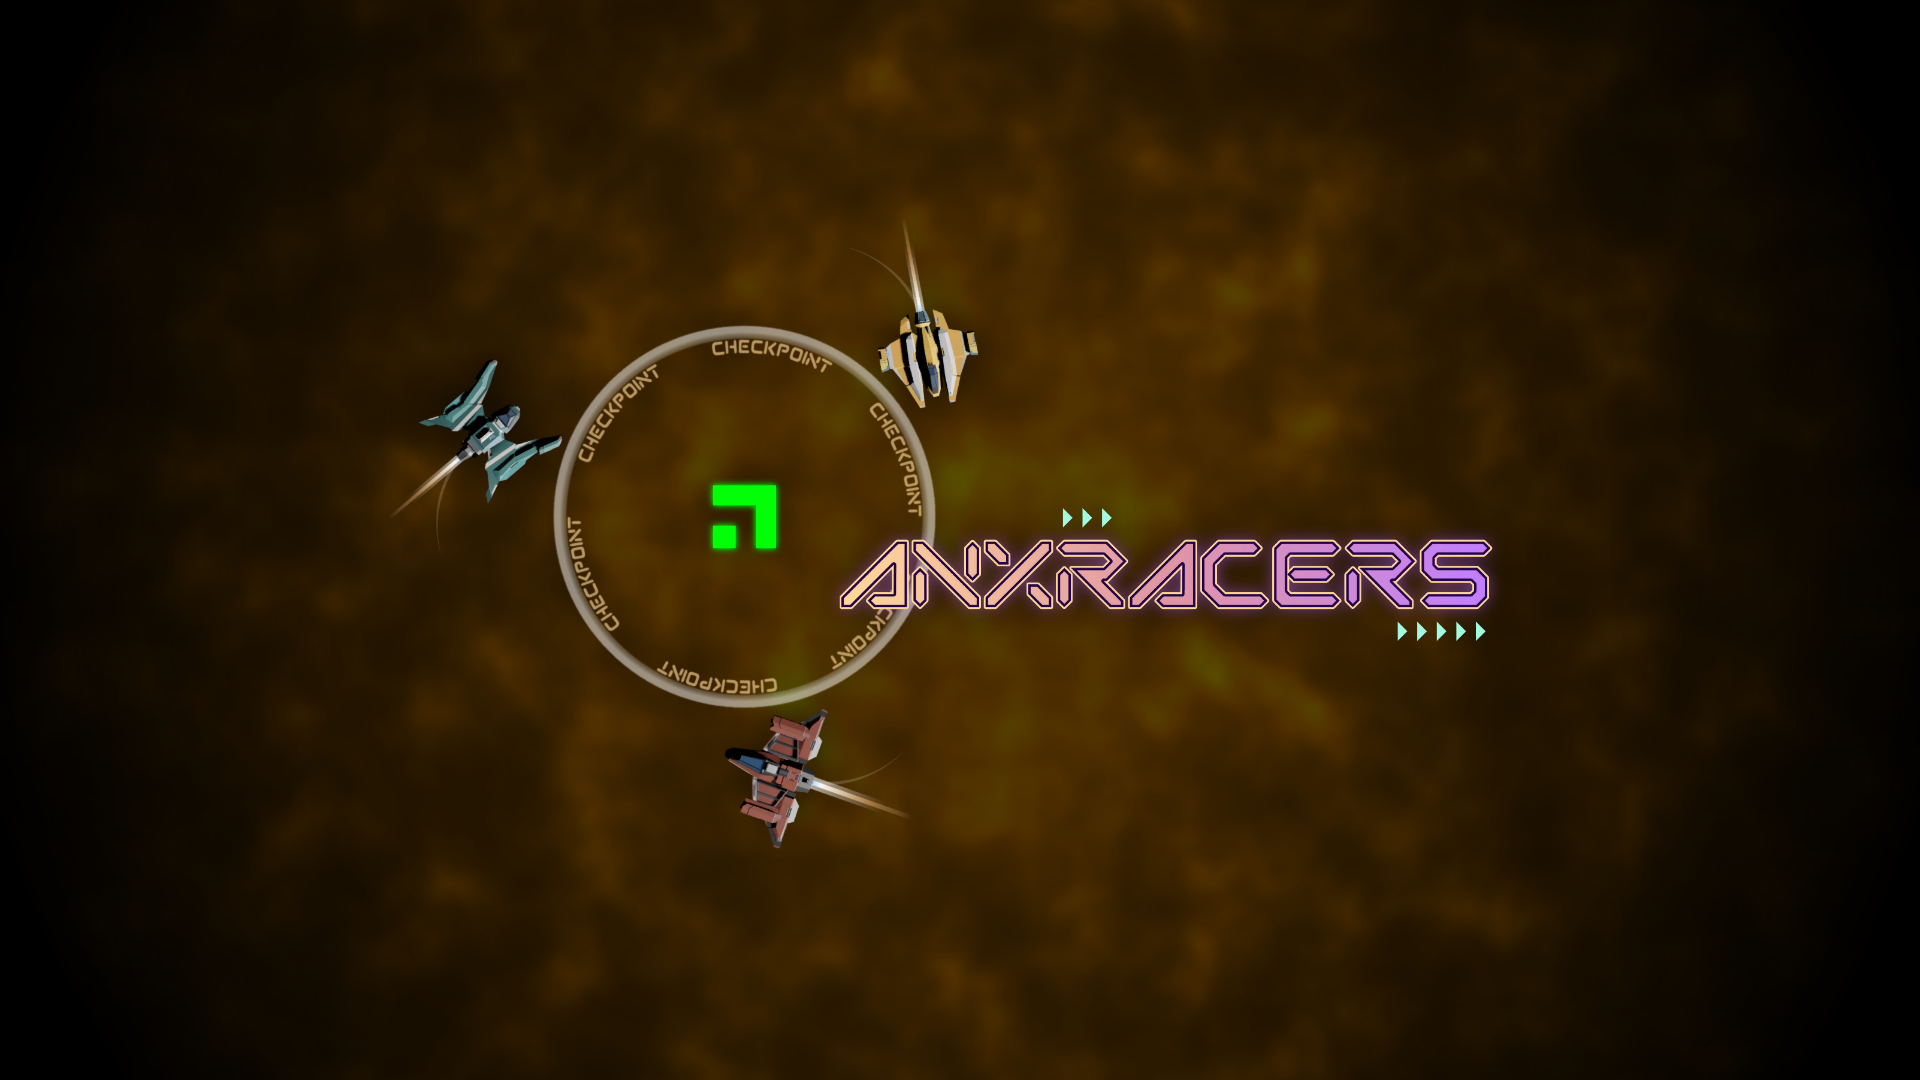 Buy ANXRacers